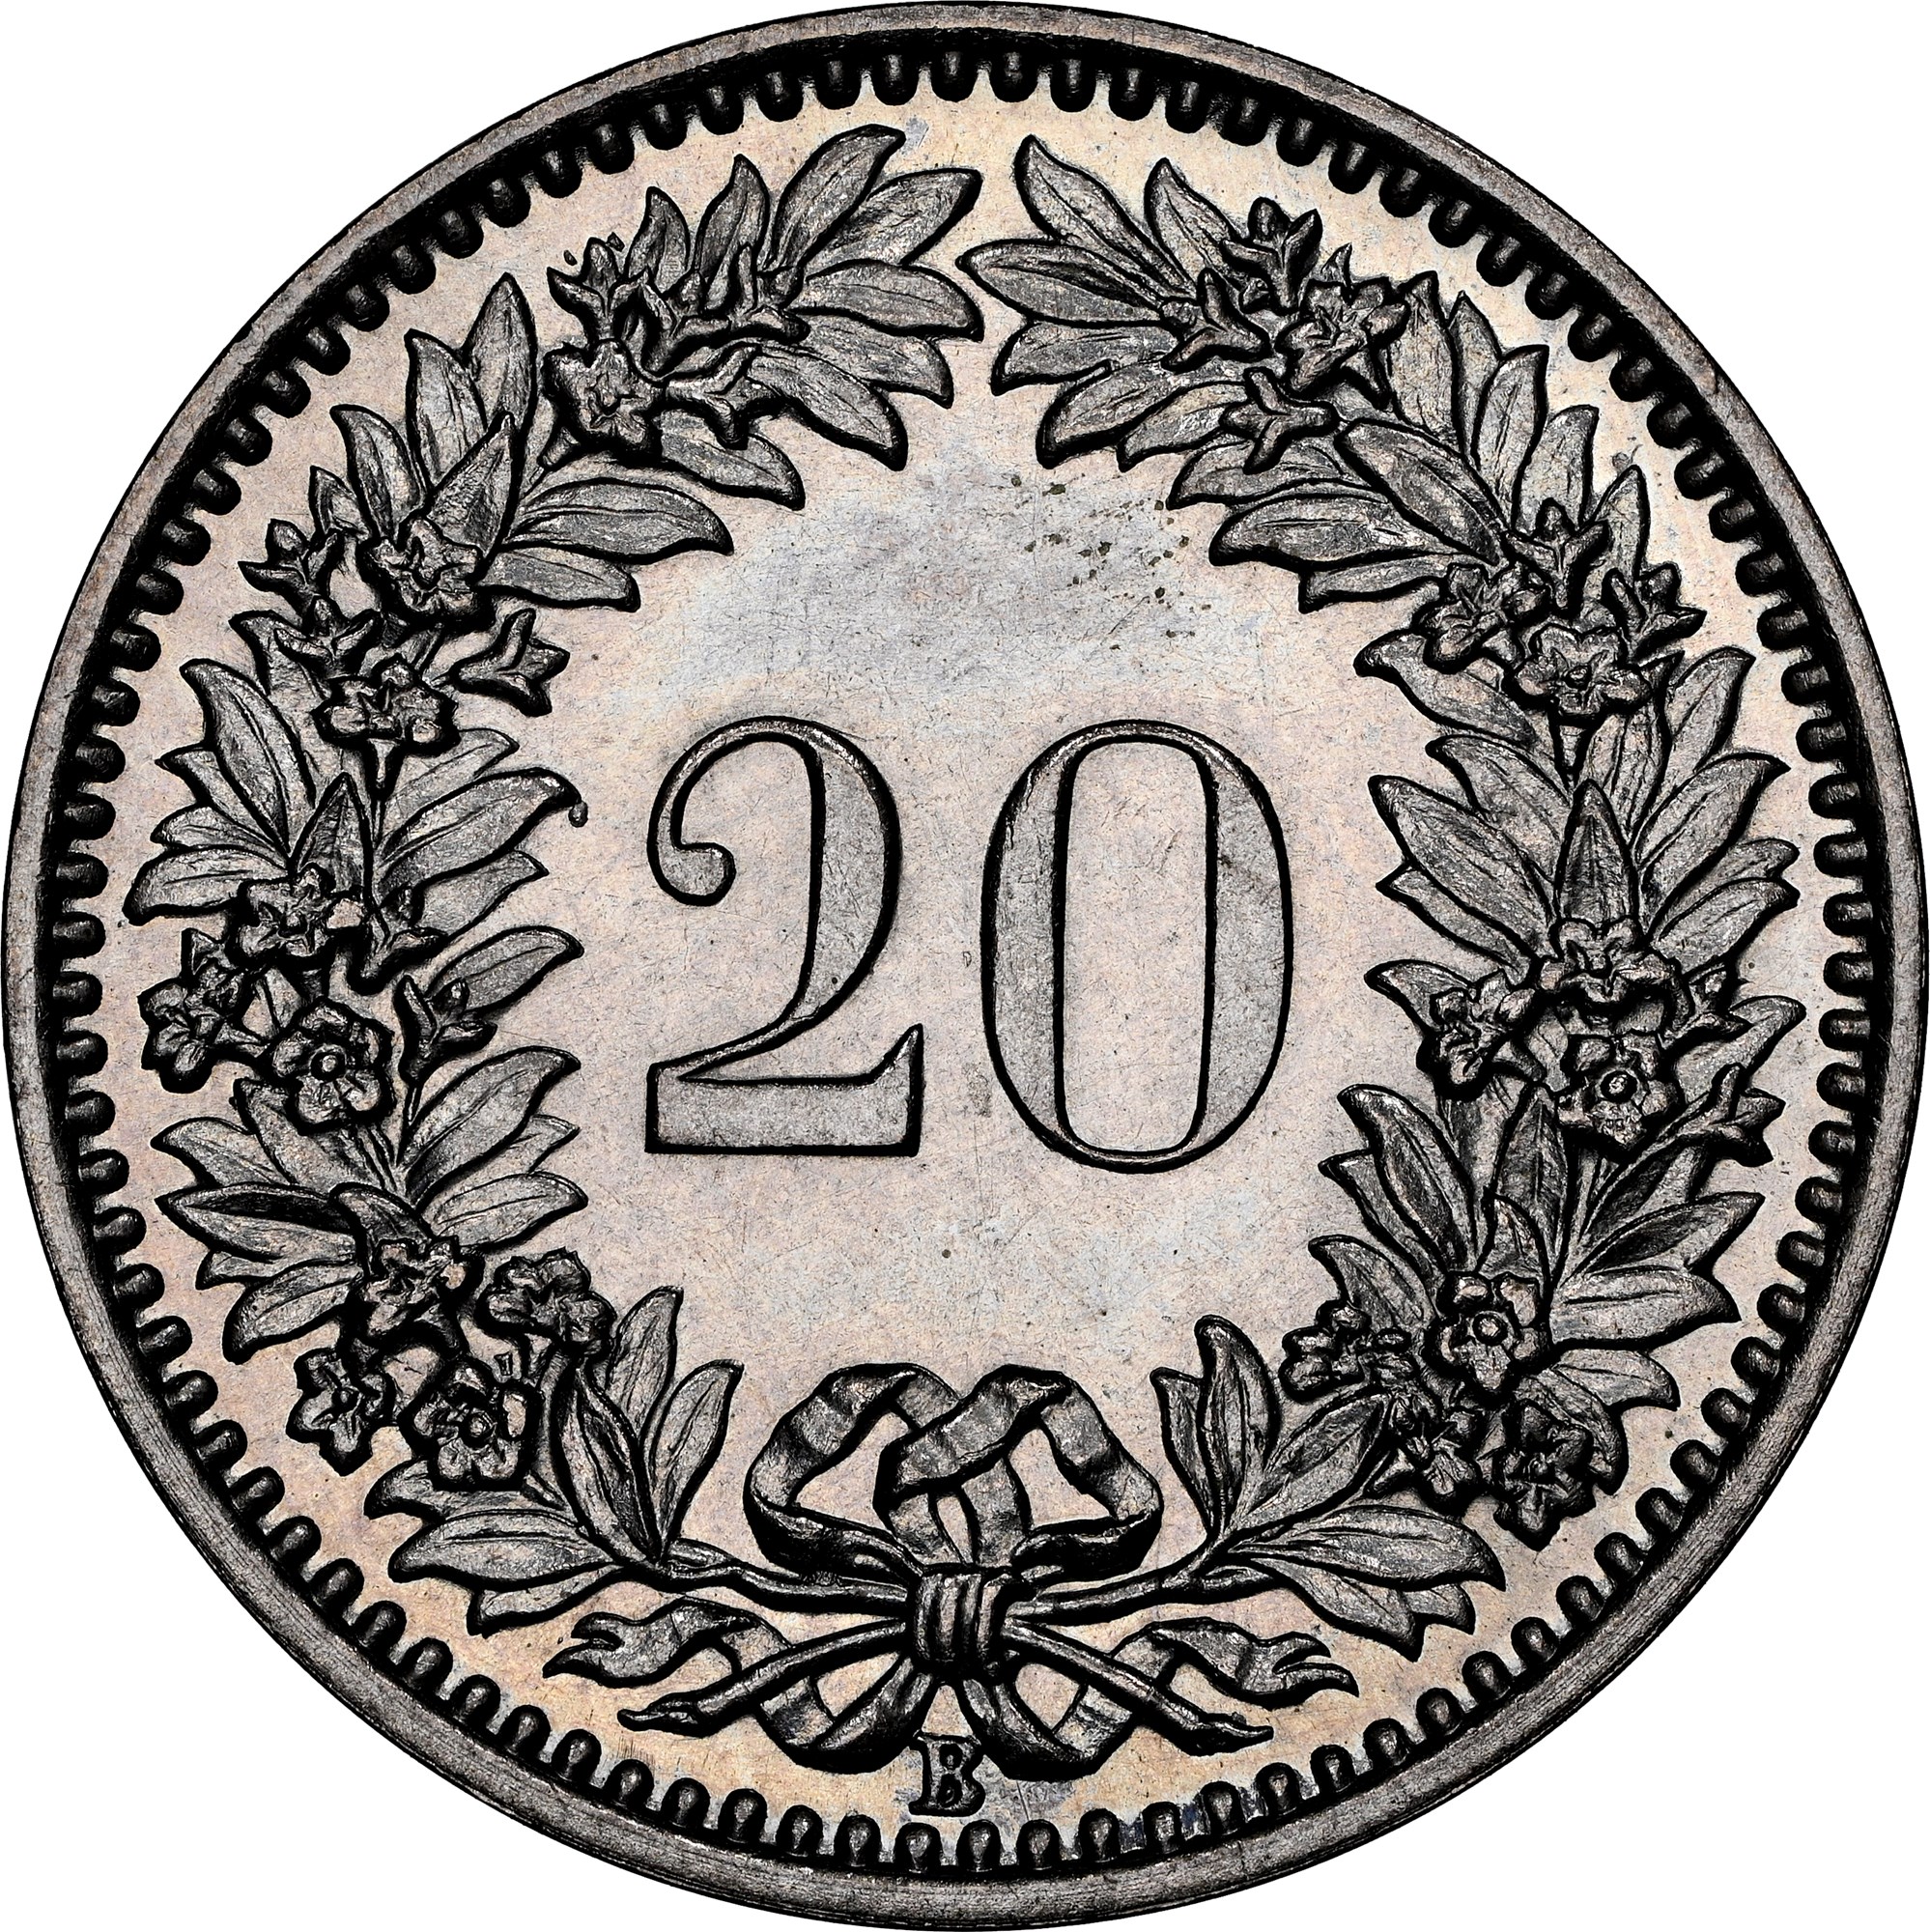 2 rappen , Switzerland - Coin value - cointime.fun